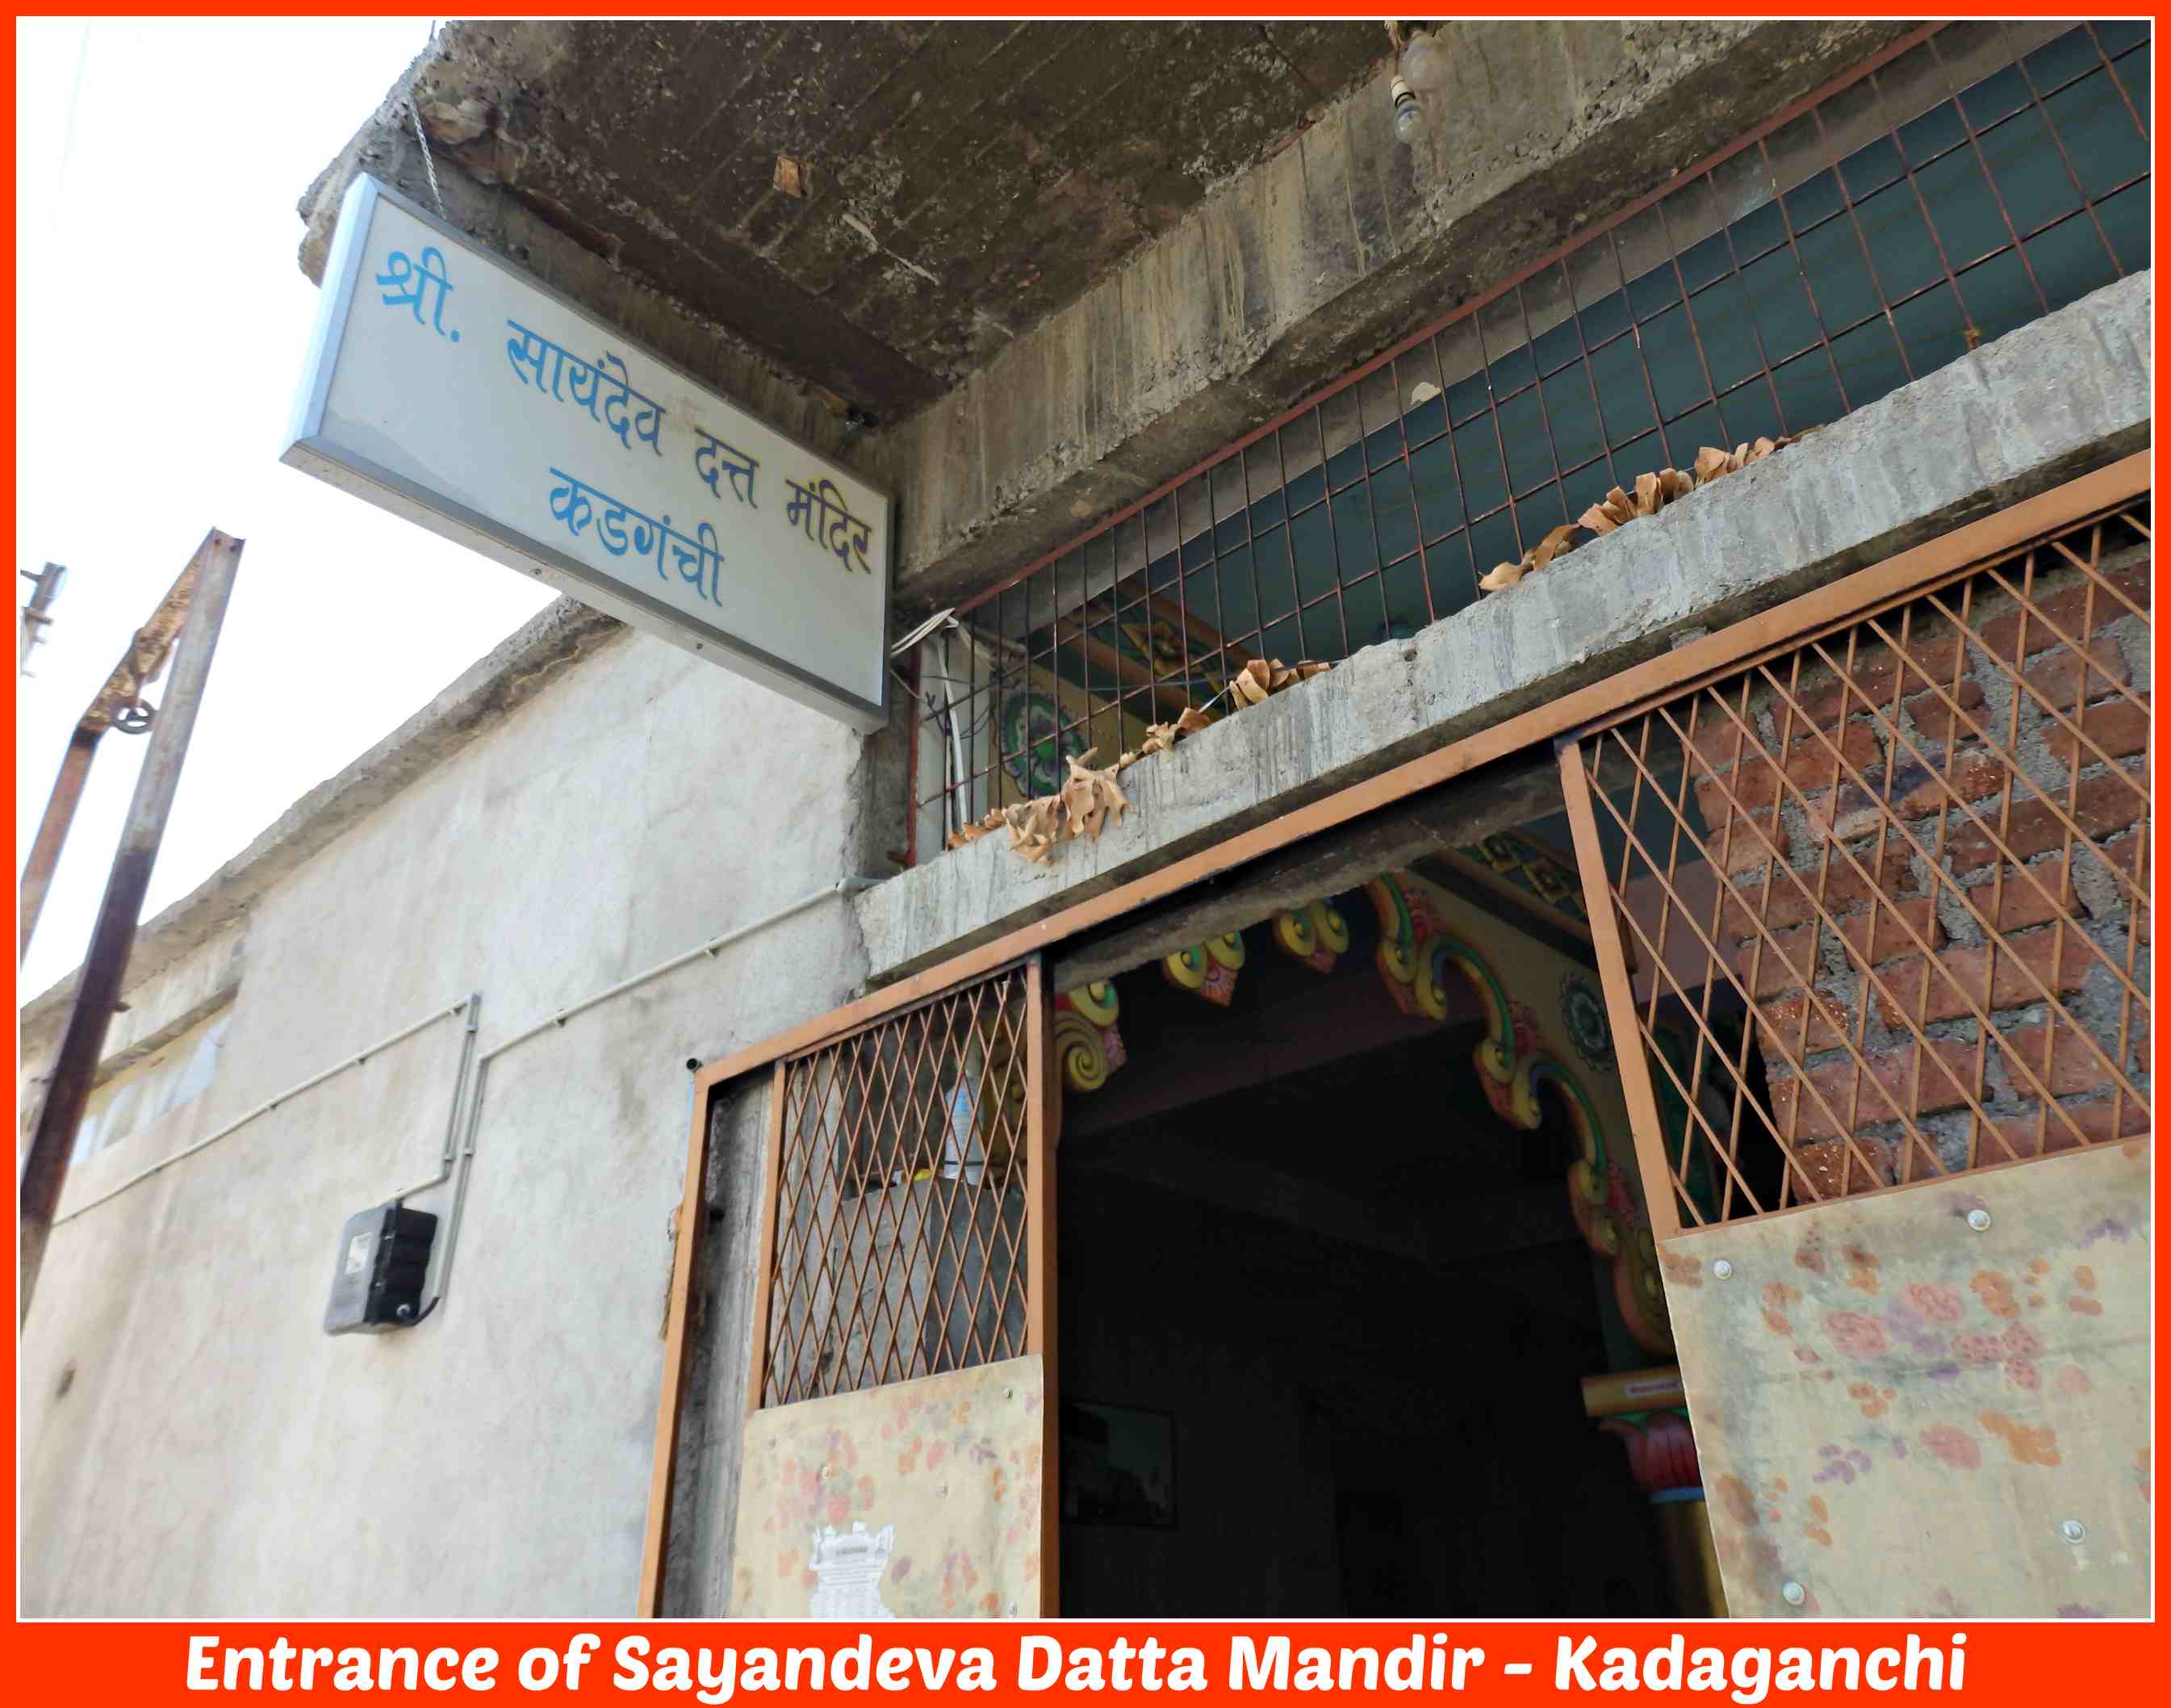 Kadaganchi Sayandeva KarunaPaduka Datta Kshetram (Sri Sayandeva House)